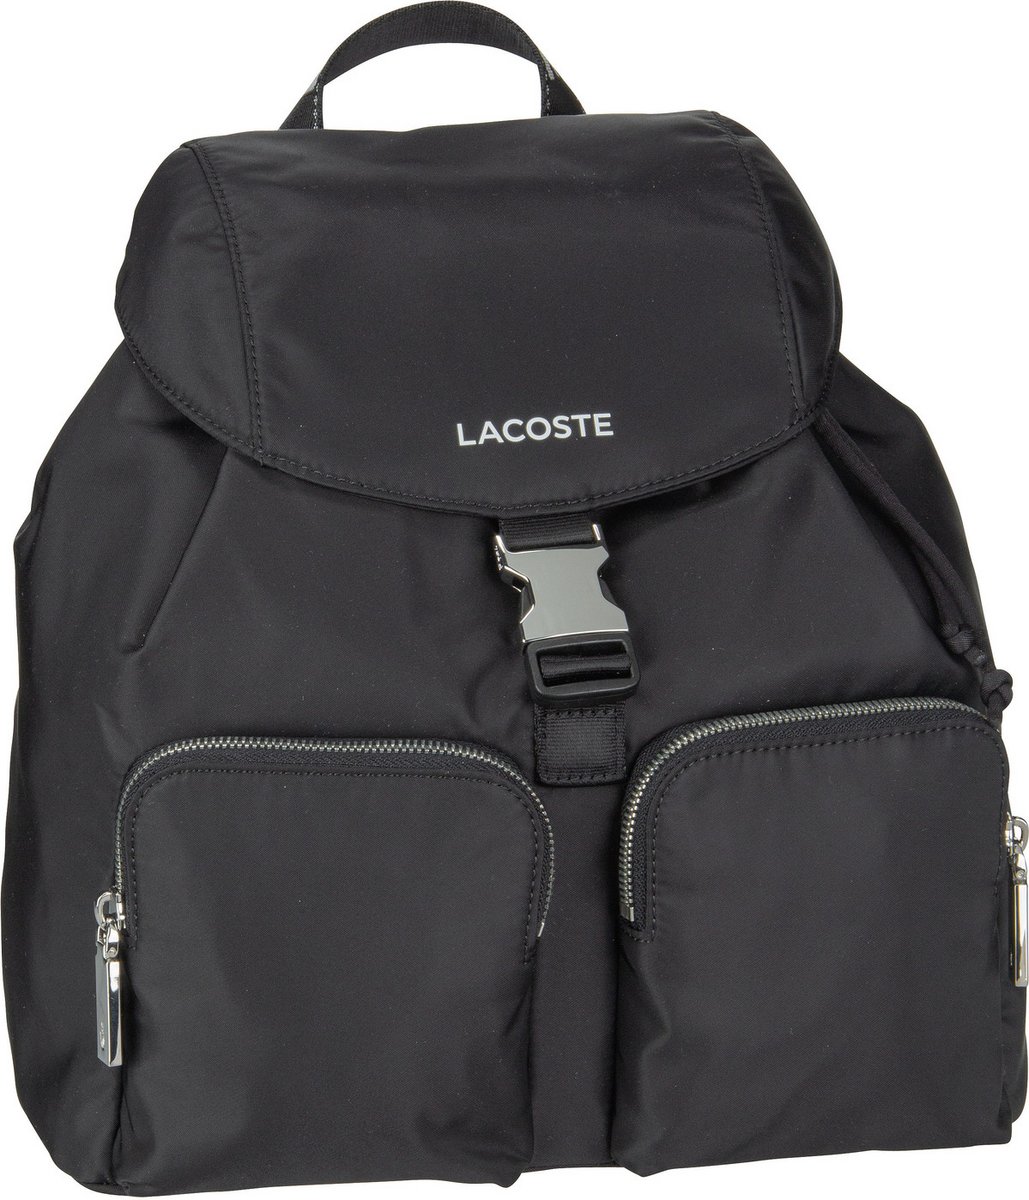 Lacoste Lacoste Rucksack / Daypack Active Nylon Backpack Black (13.1 Liter)